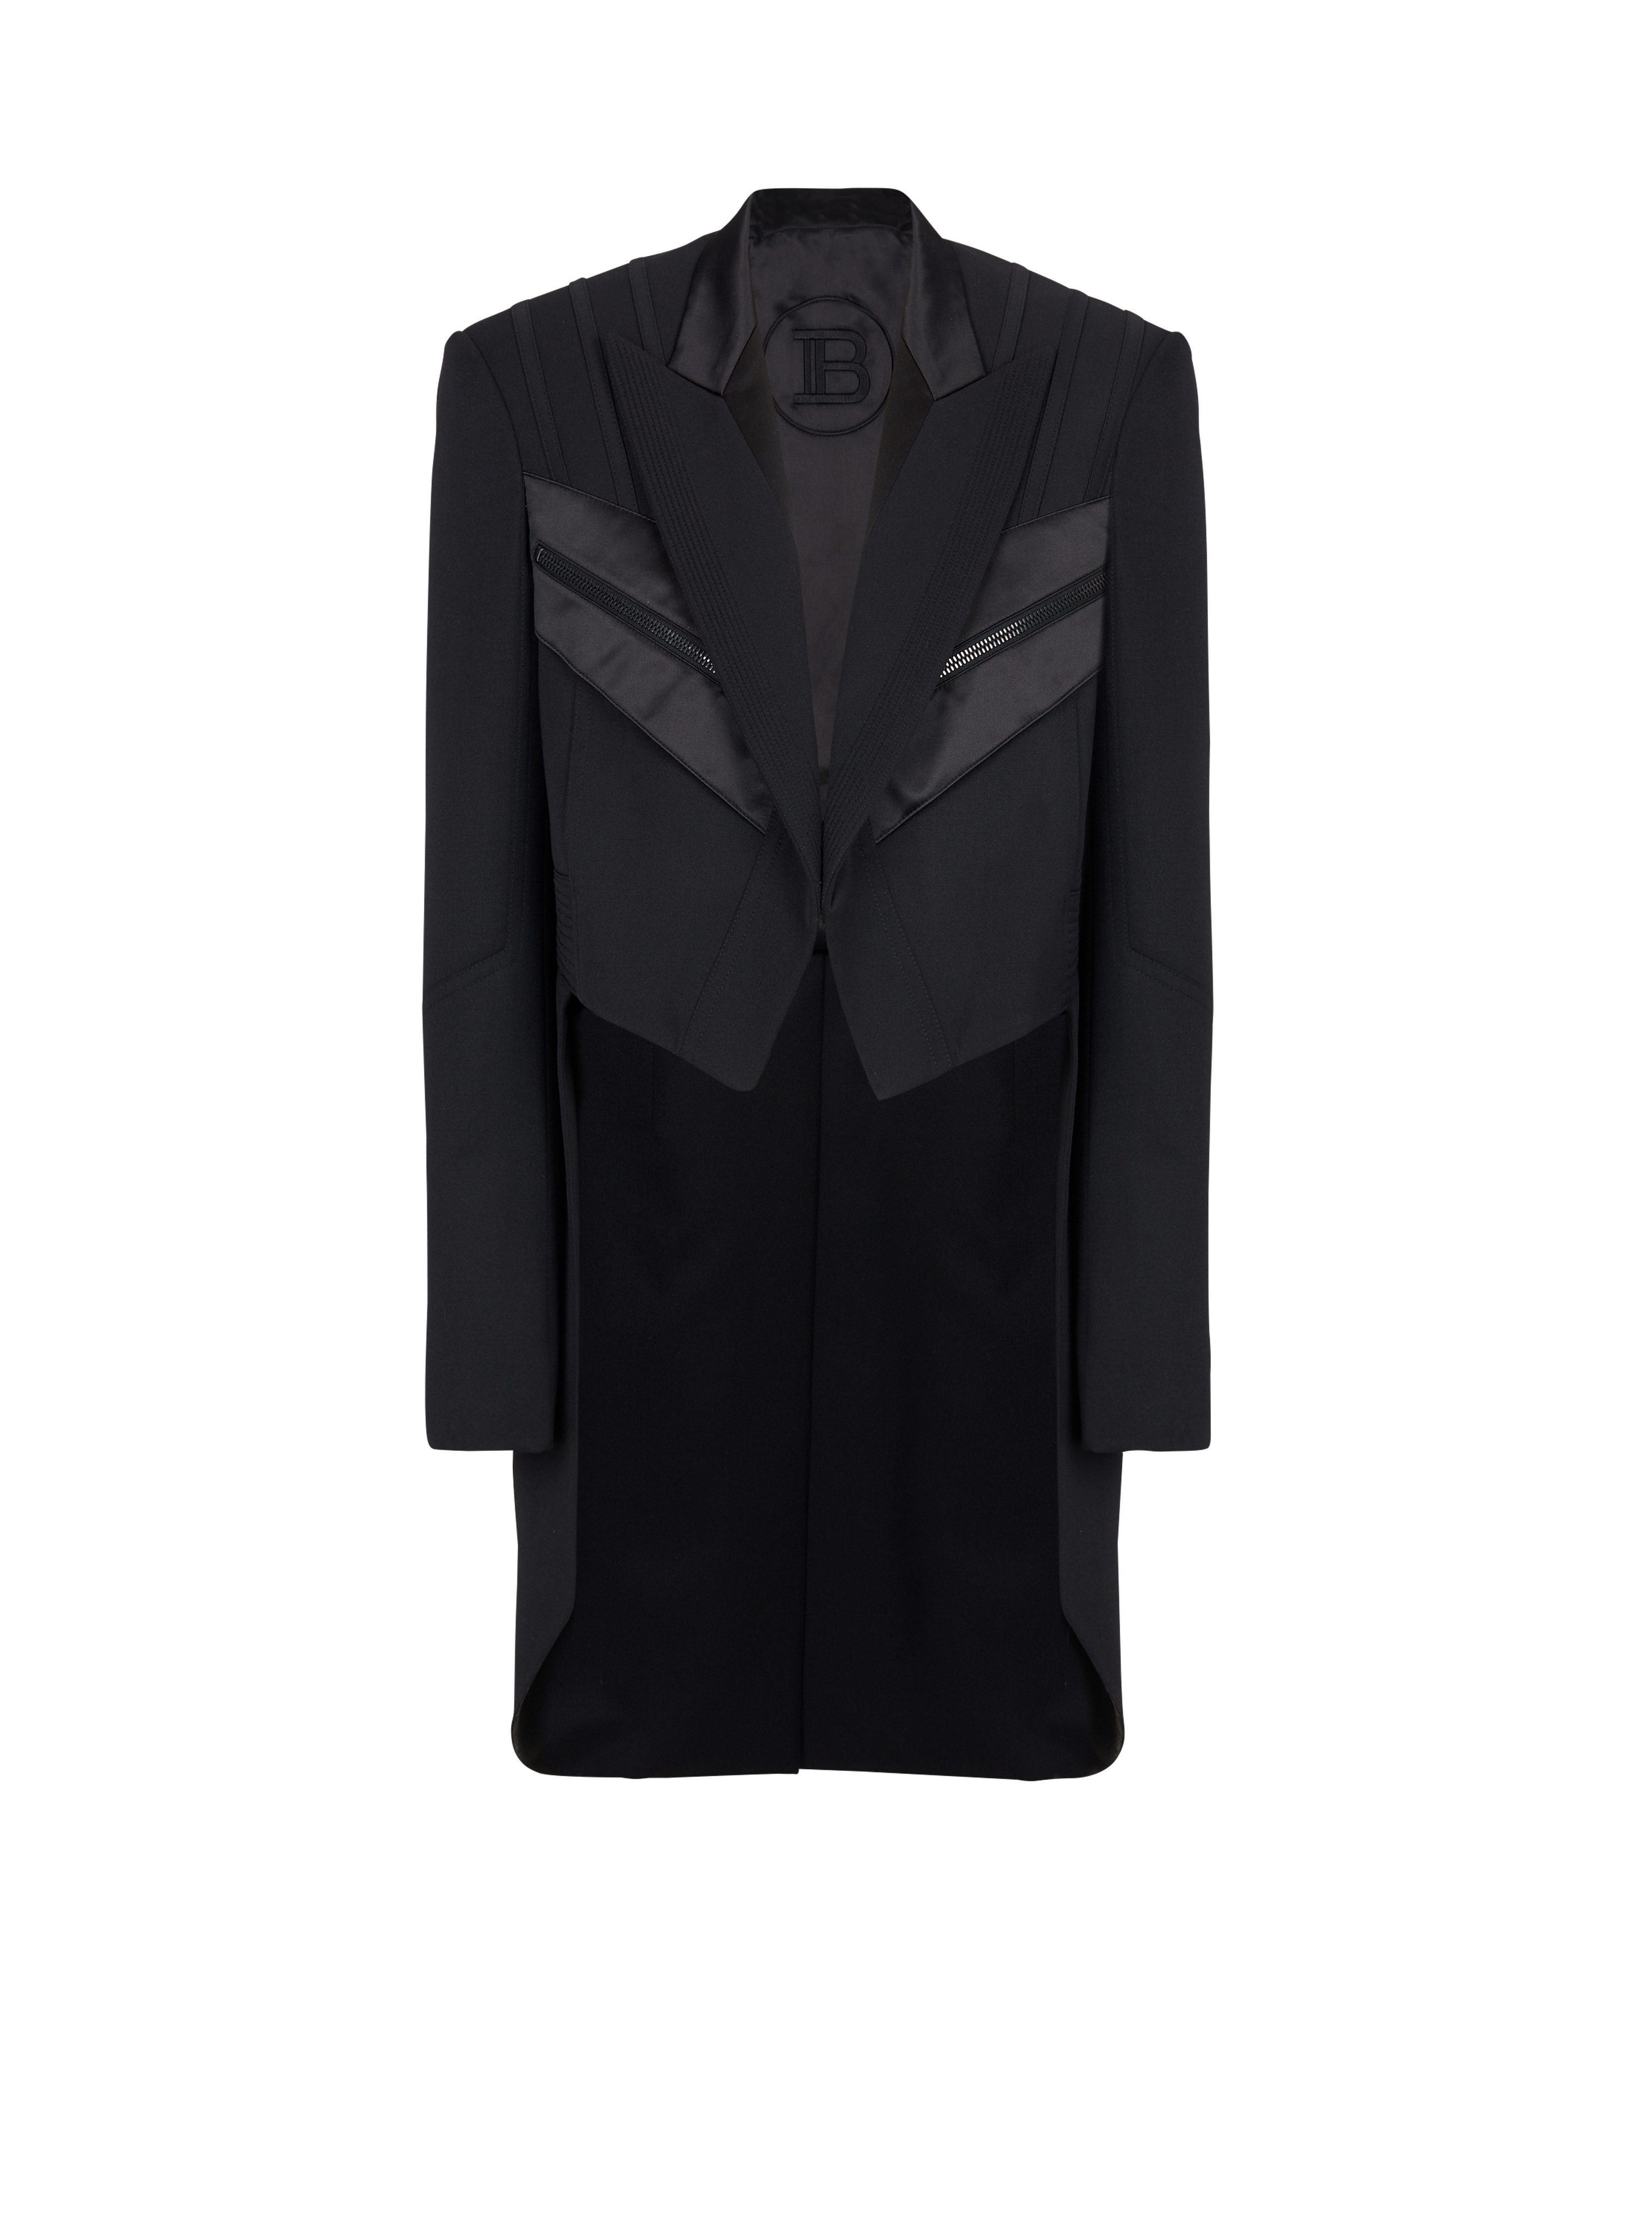 Blazer with satin tailcoat, black